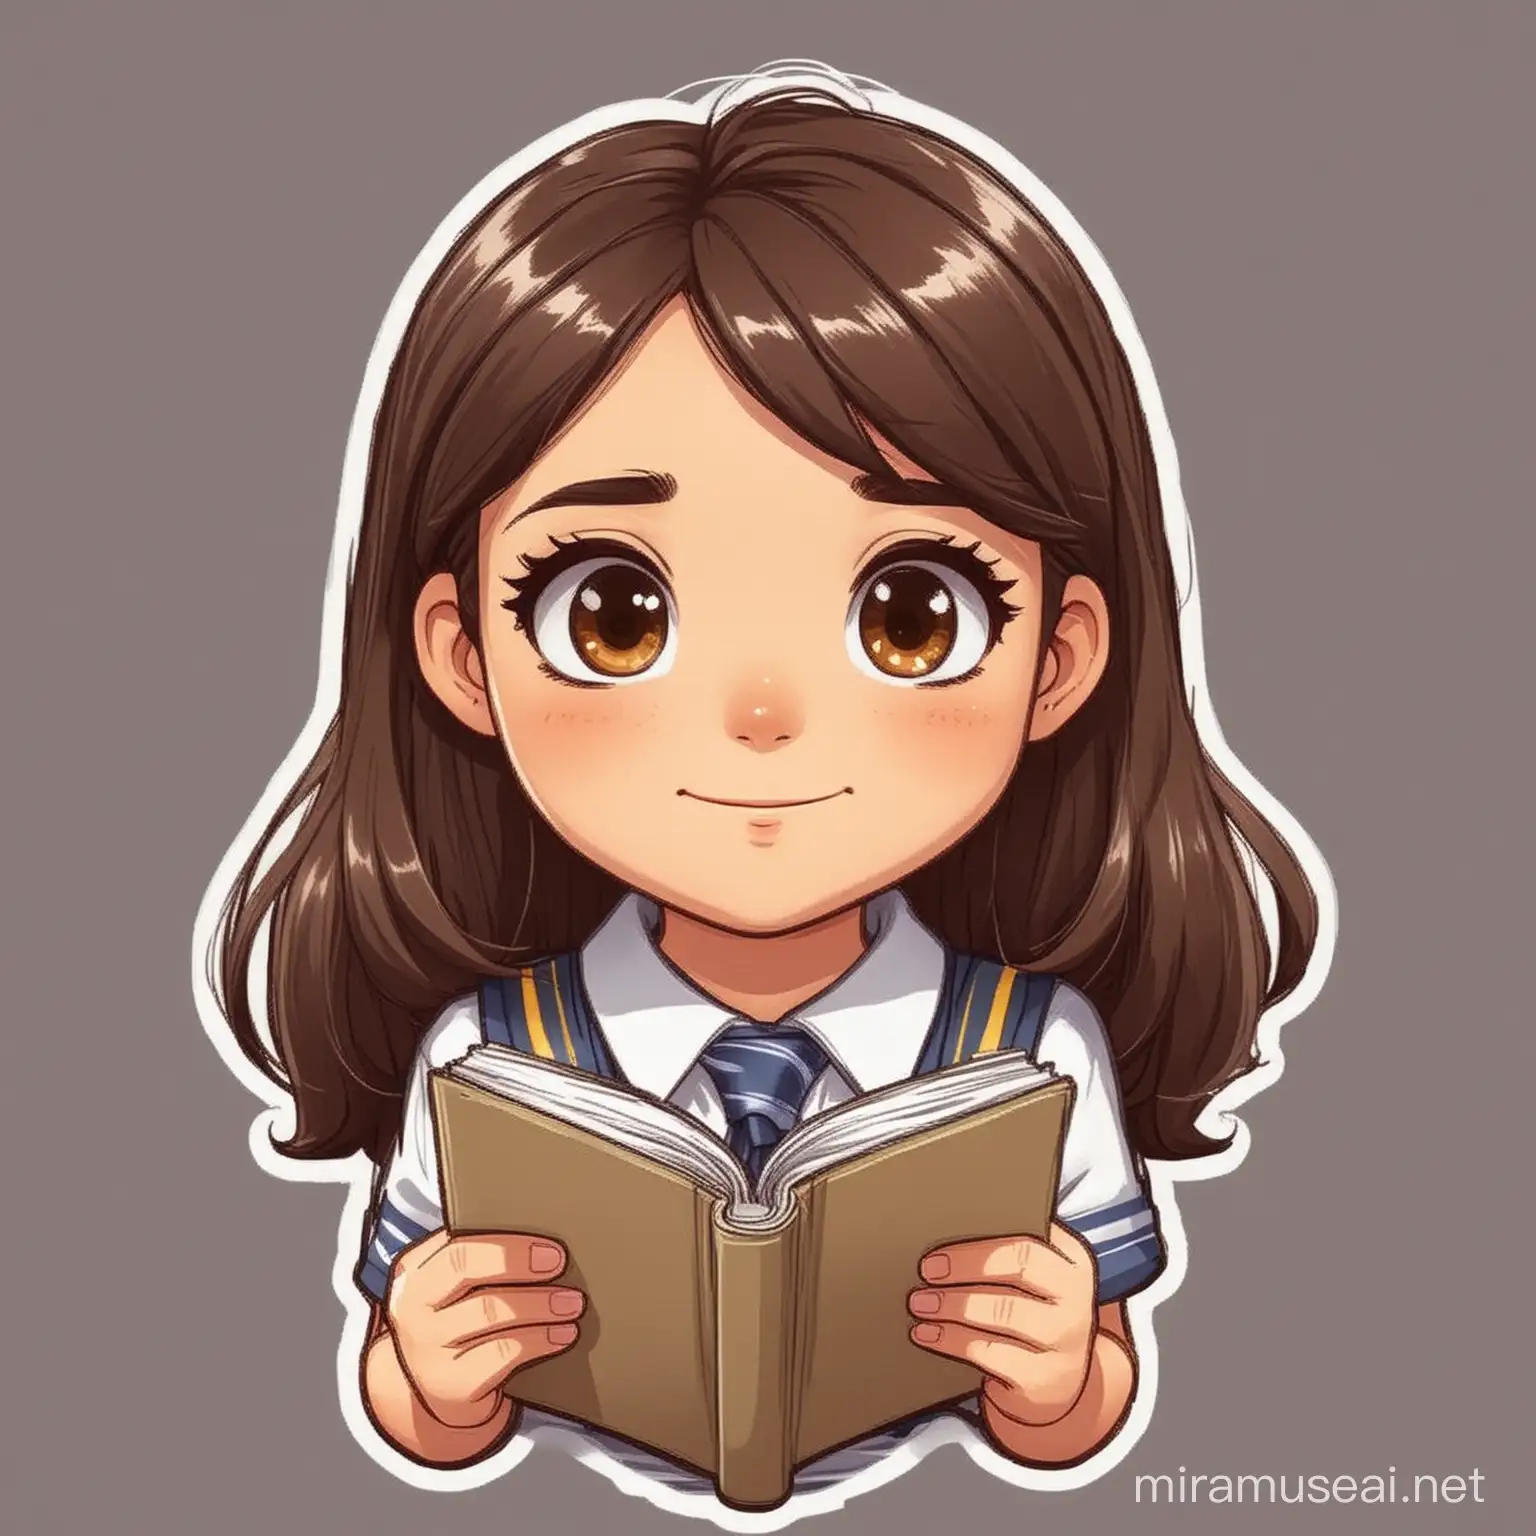 girl, wearing school uniform, reading, cartoon sticker style, high level detail, dark brown colored hair